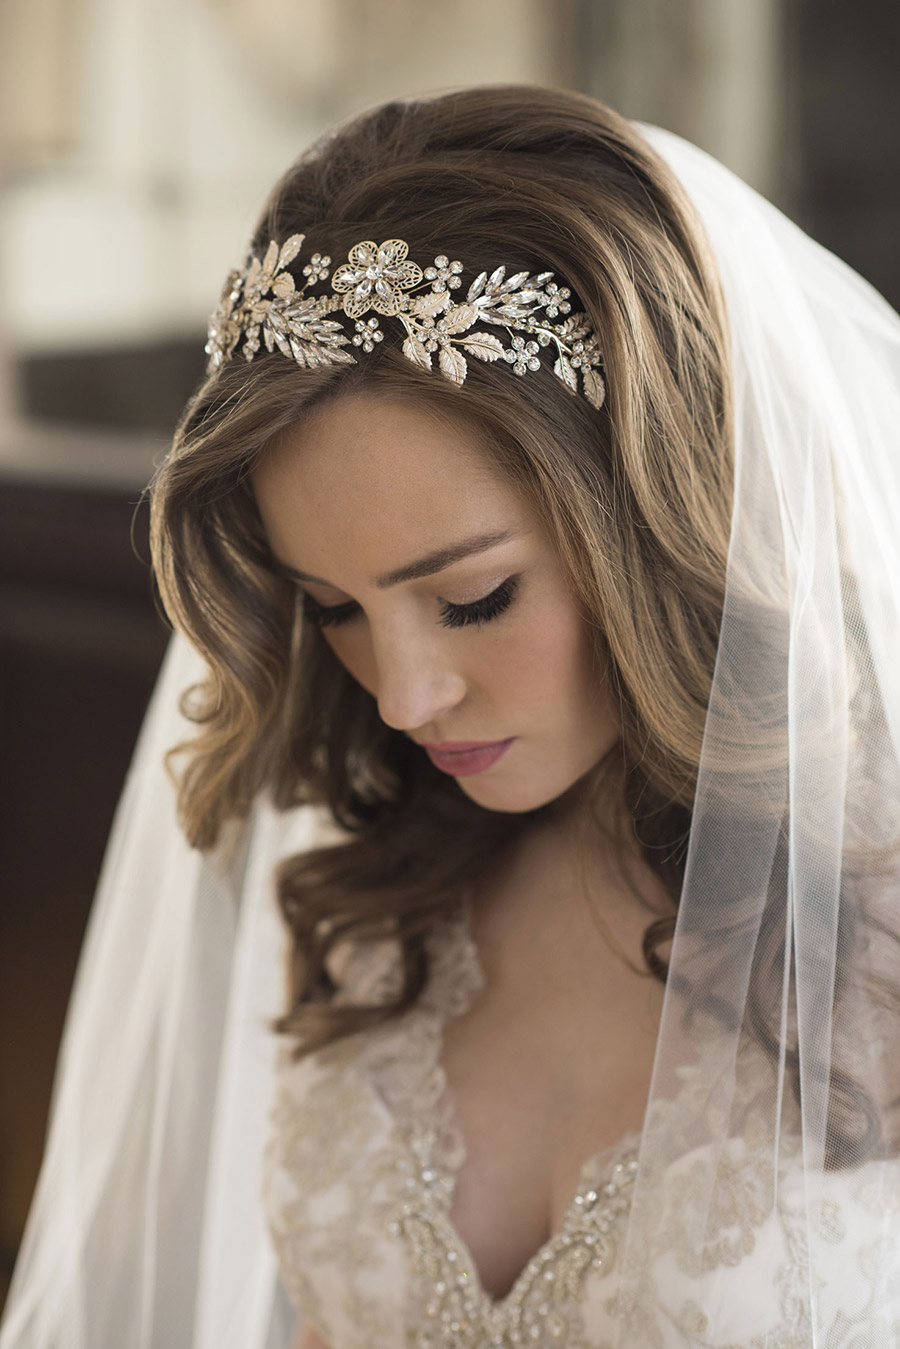 bel aire bridal accessories gilded curving headband metallic ribbon ties 6686 klk photography ebell wedding shoot zv